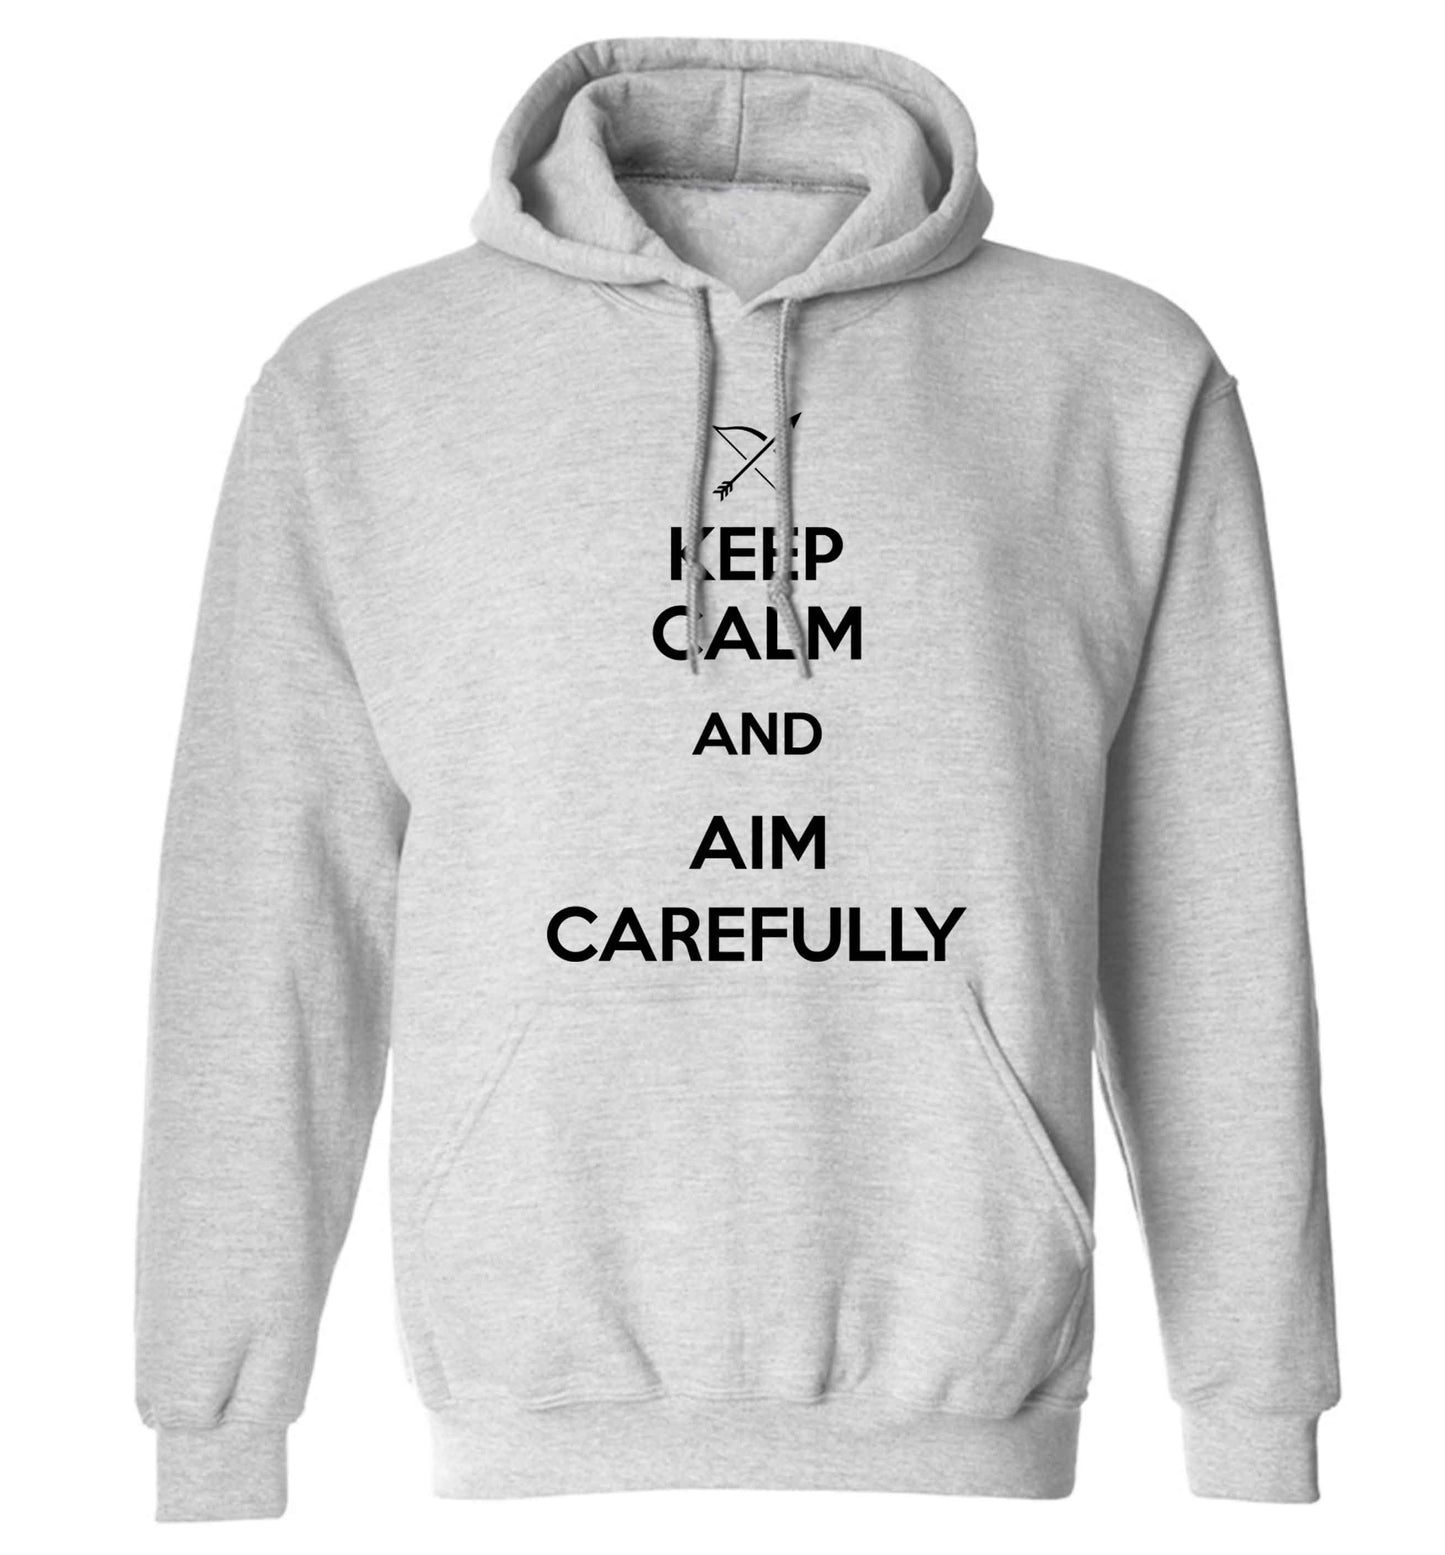 Keep calm and aim carefully adults unisex grey hoodie 2XL